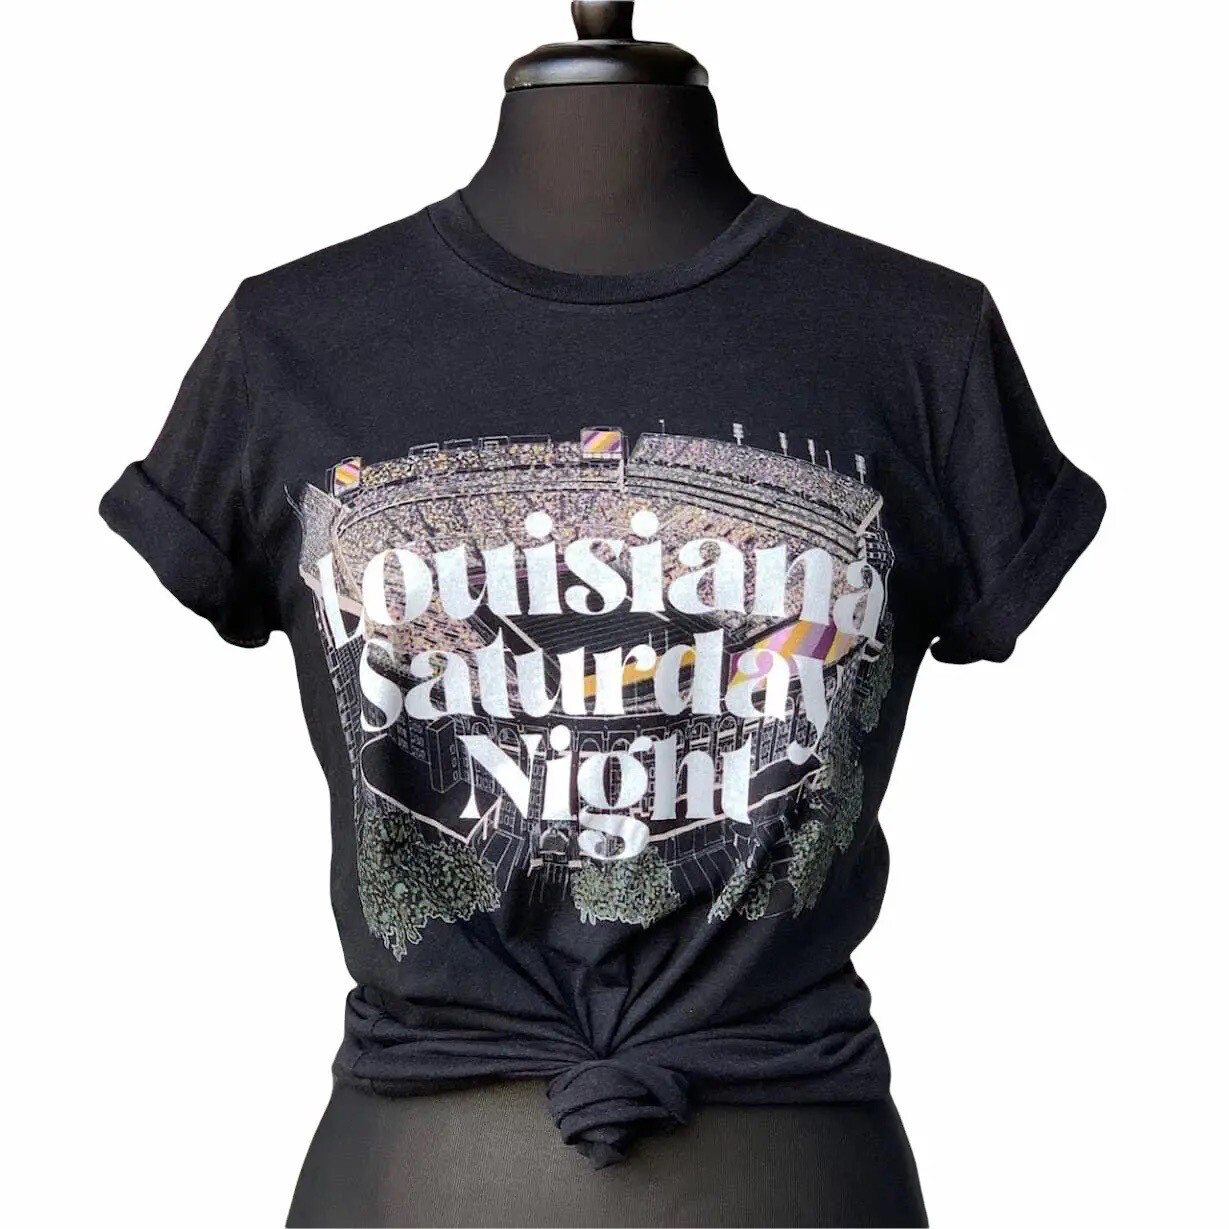 Louisiana Saturday Night Unisex T-Shirt